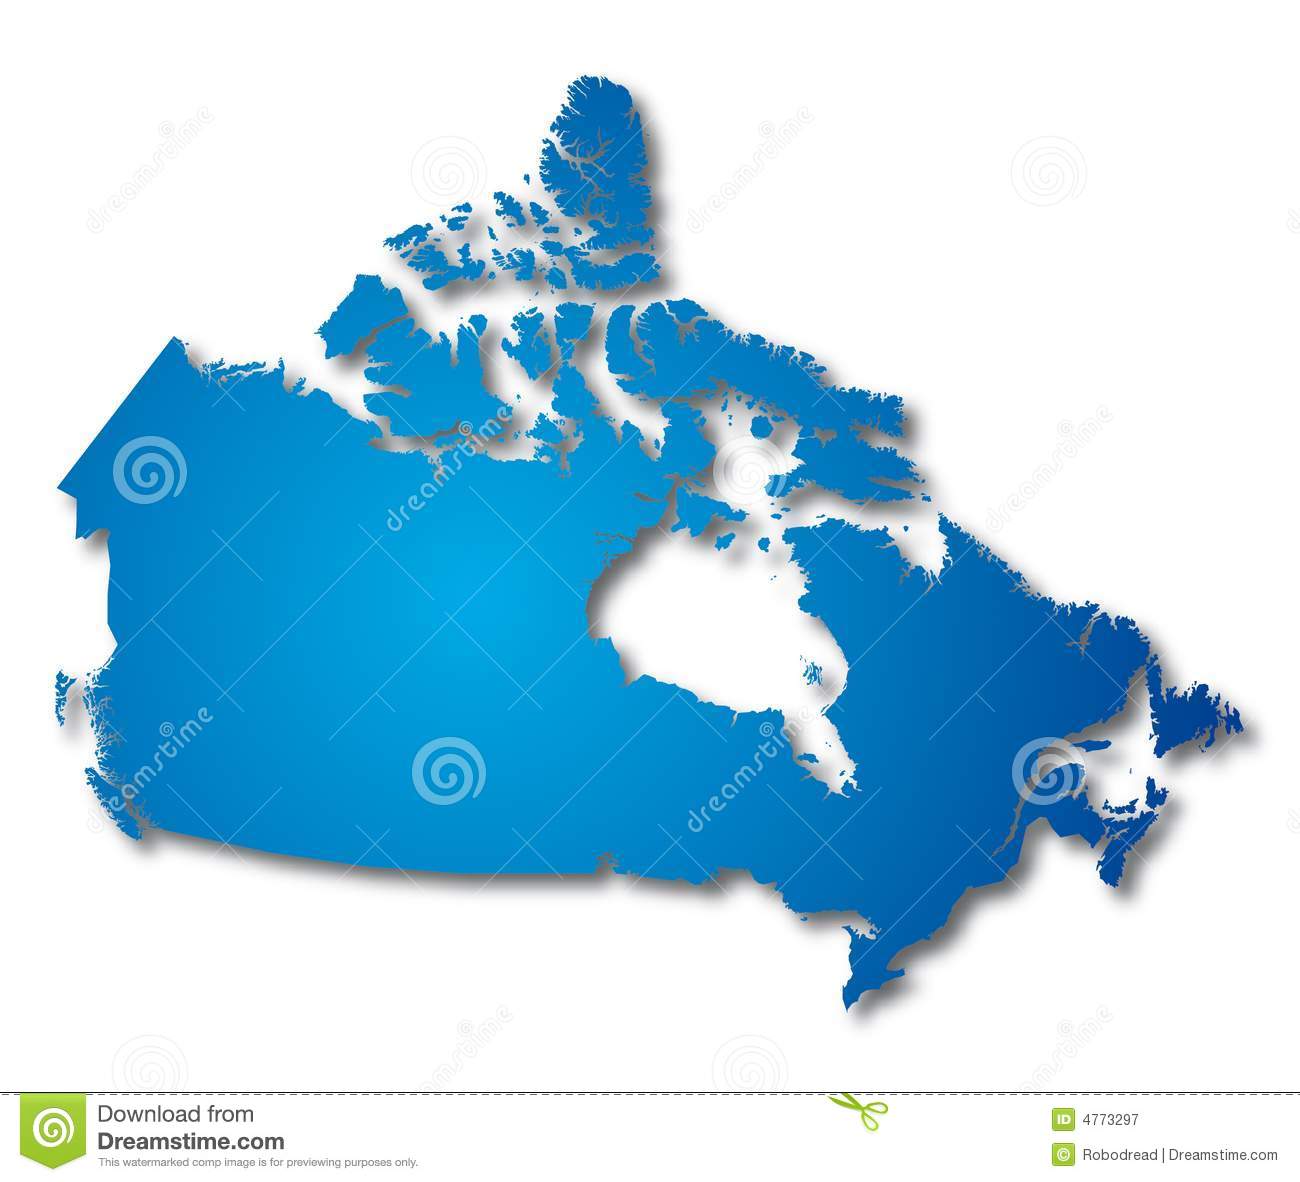 Canada Vector Map